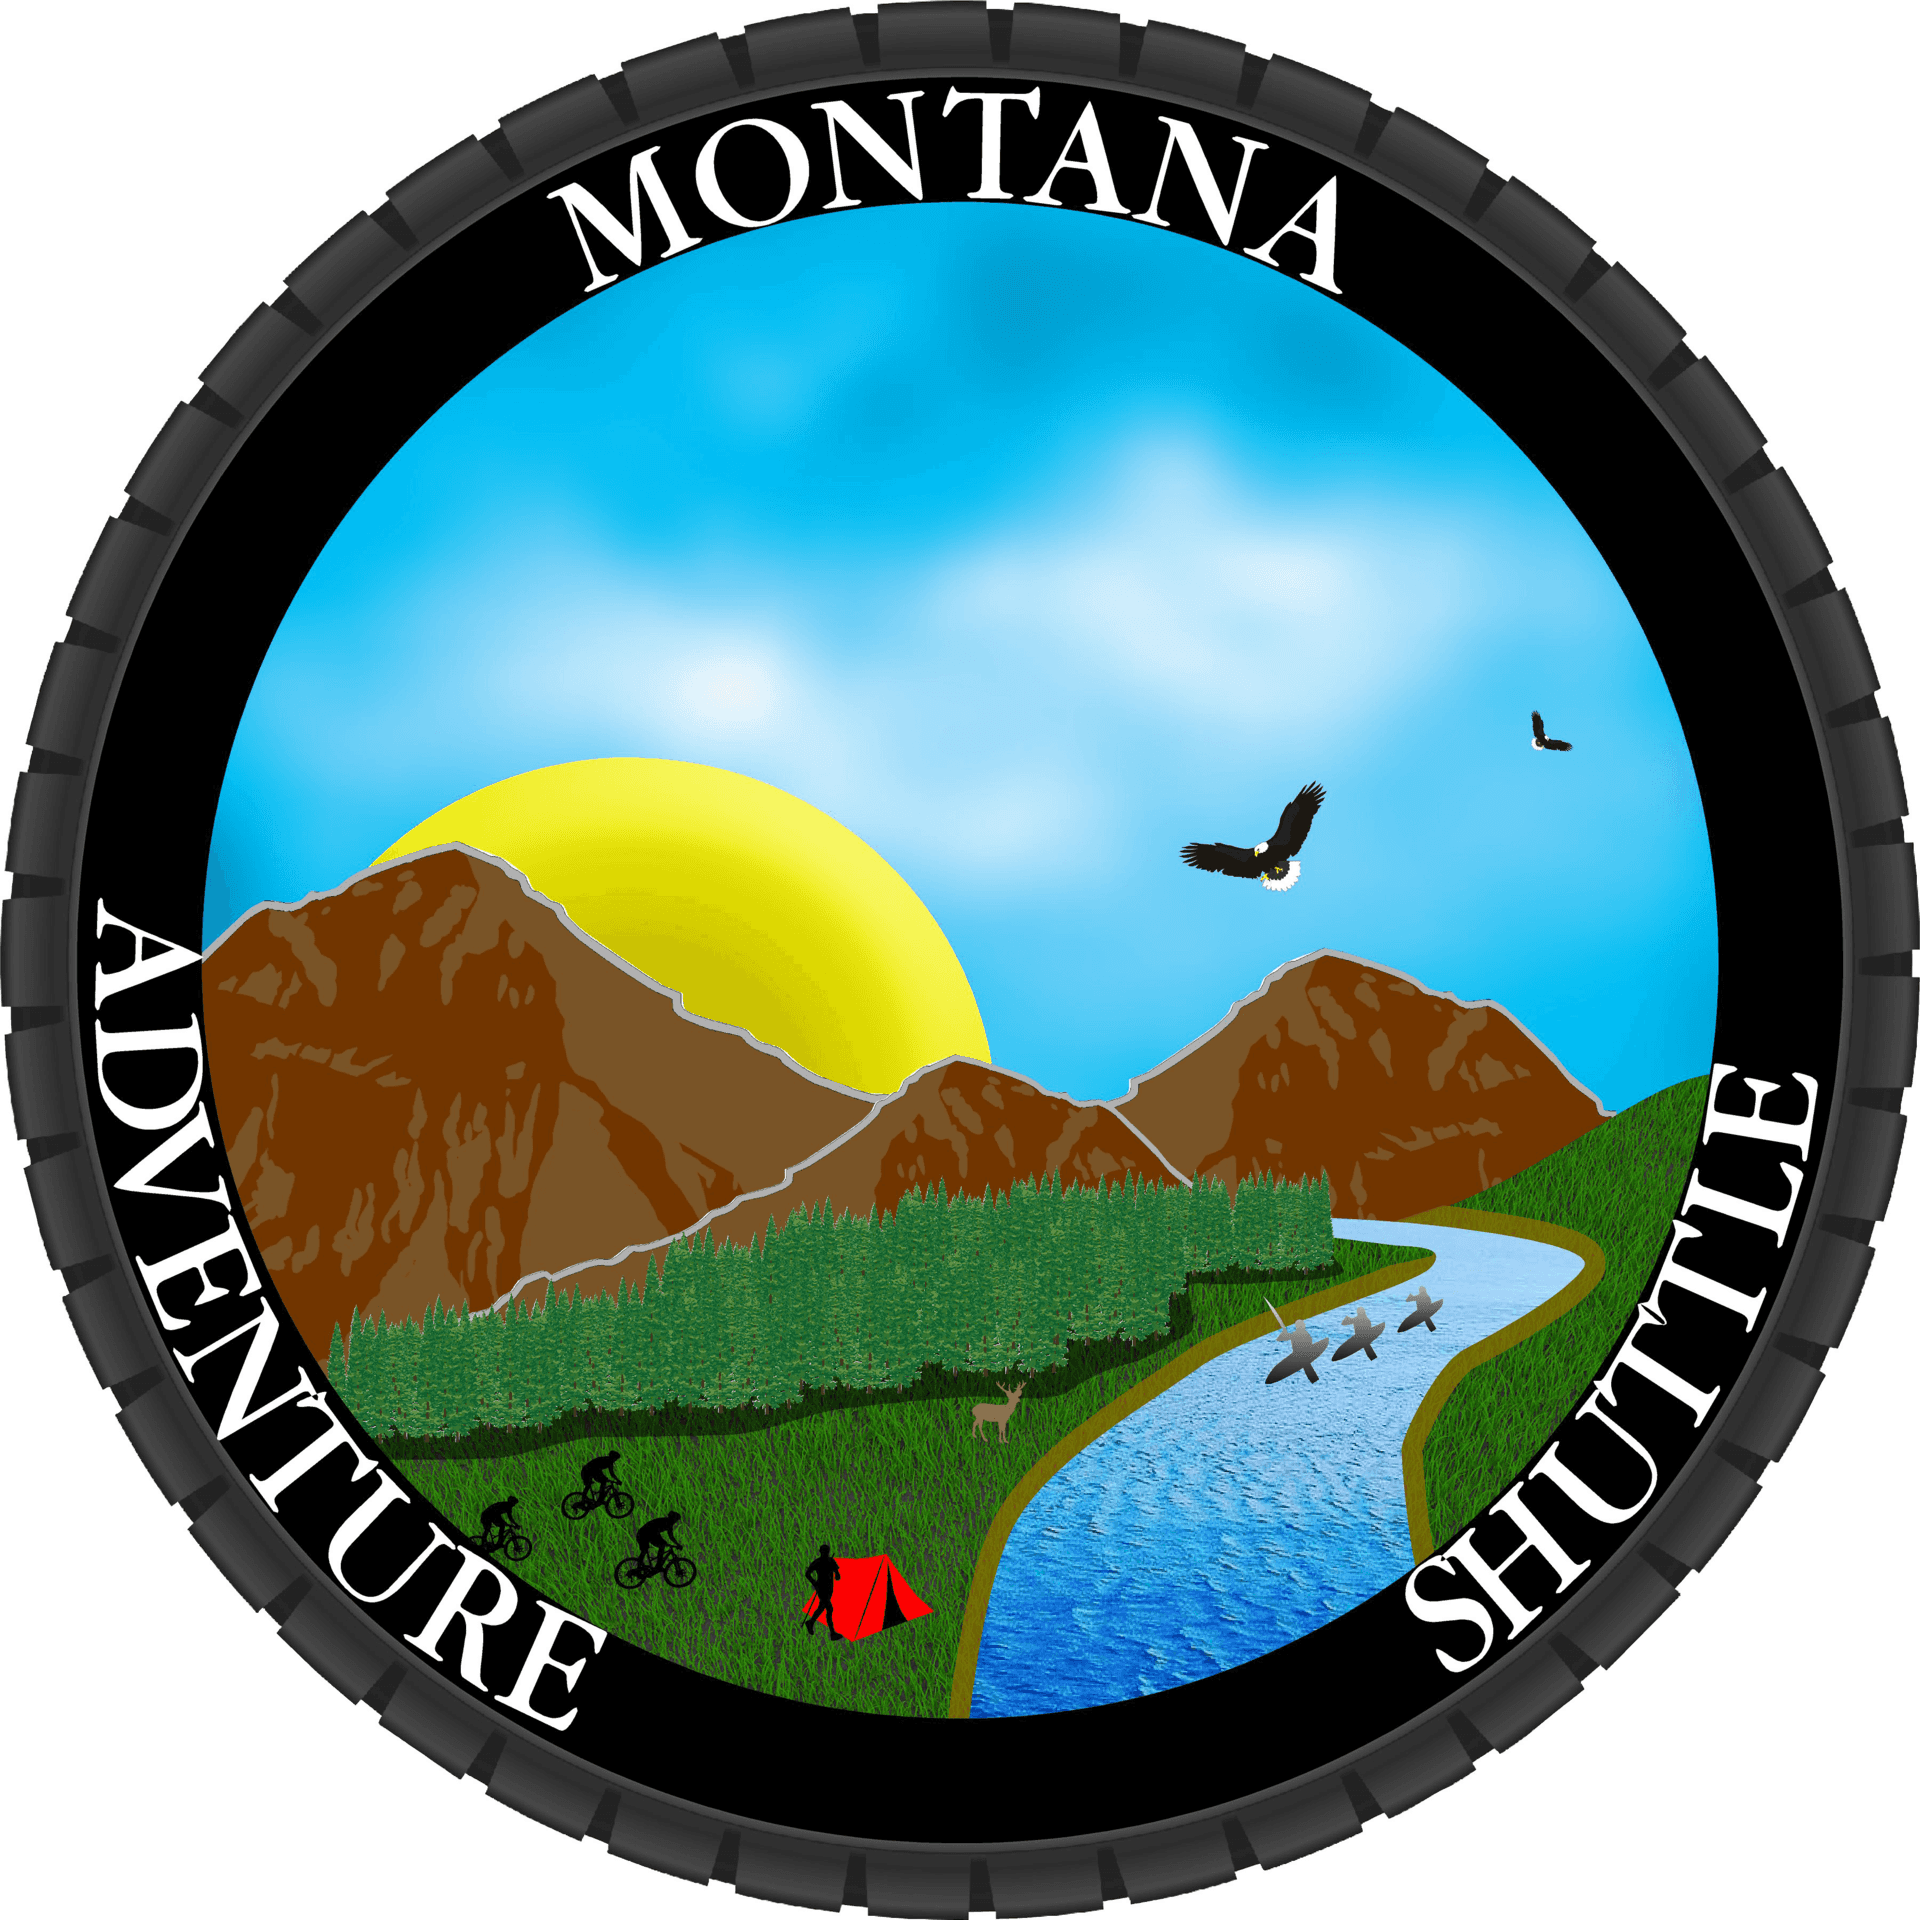 Montana Adventure Shuttle